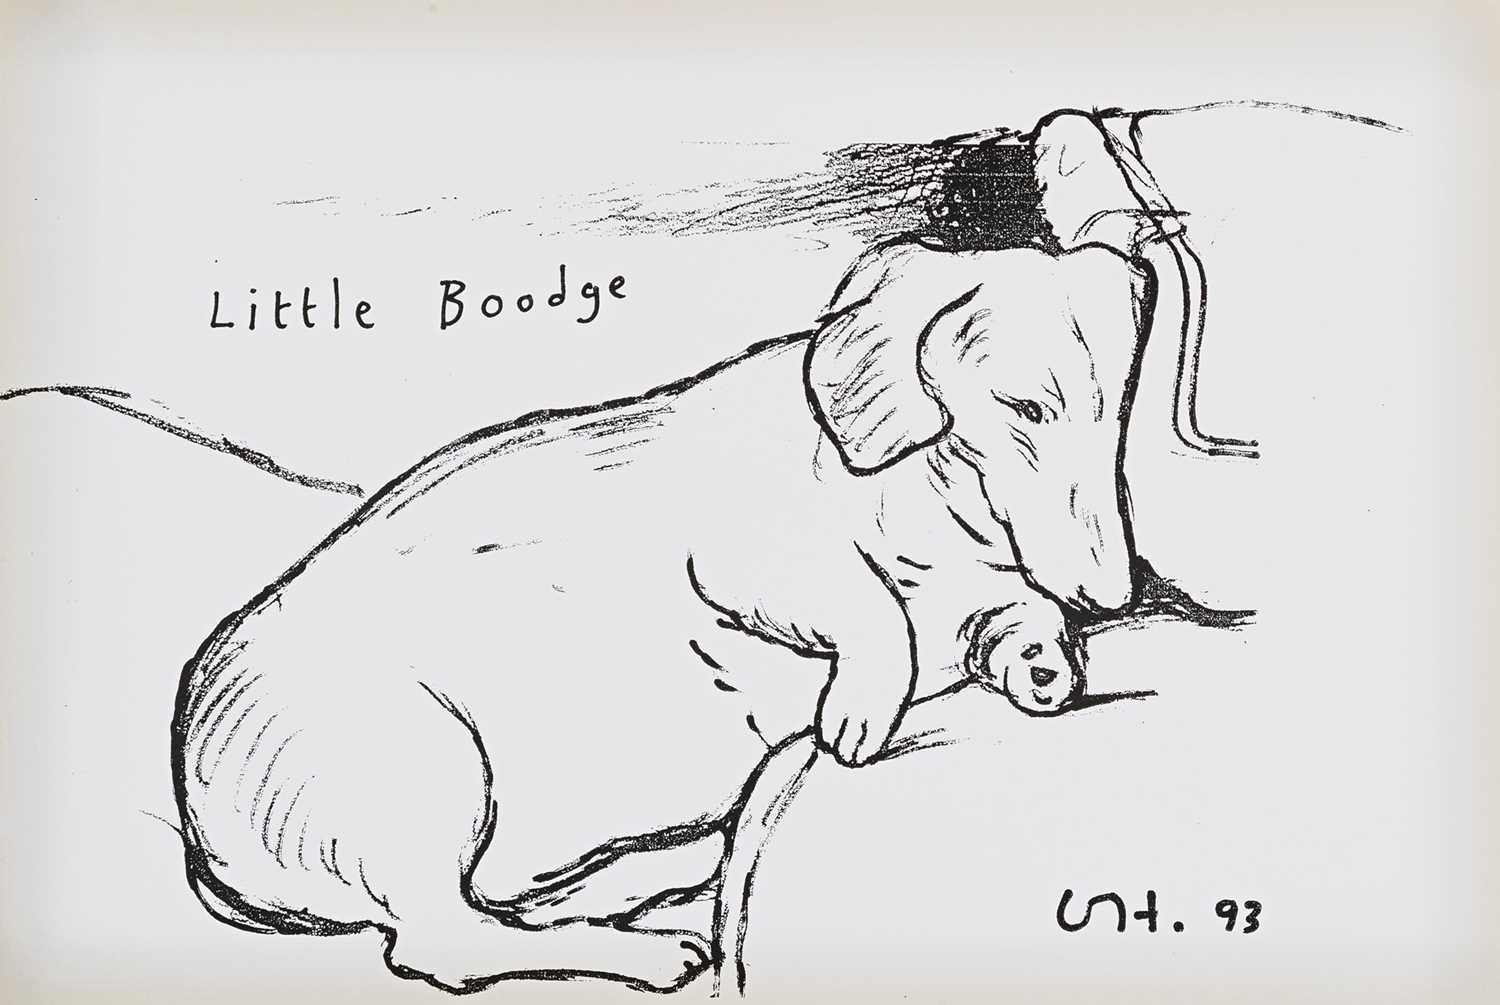 Lot 38 - David Hockney (British 1937-), 'Little Boodge' 1993